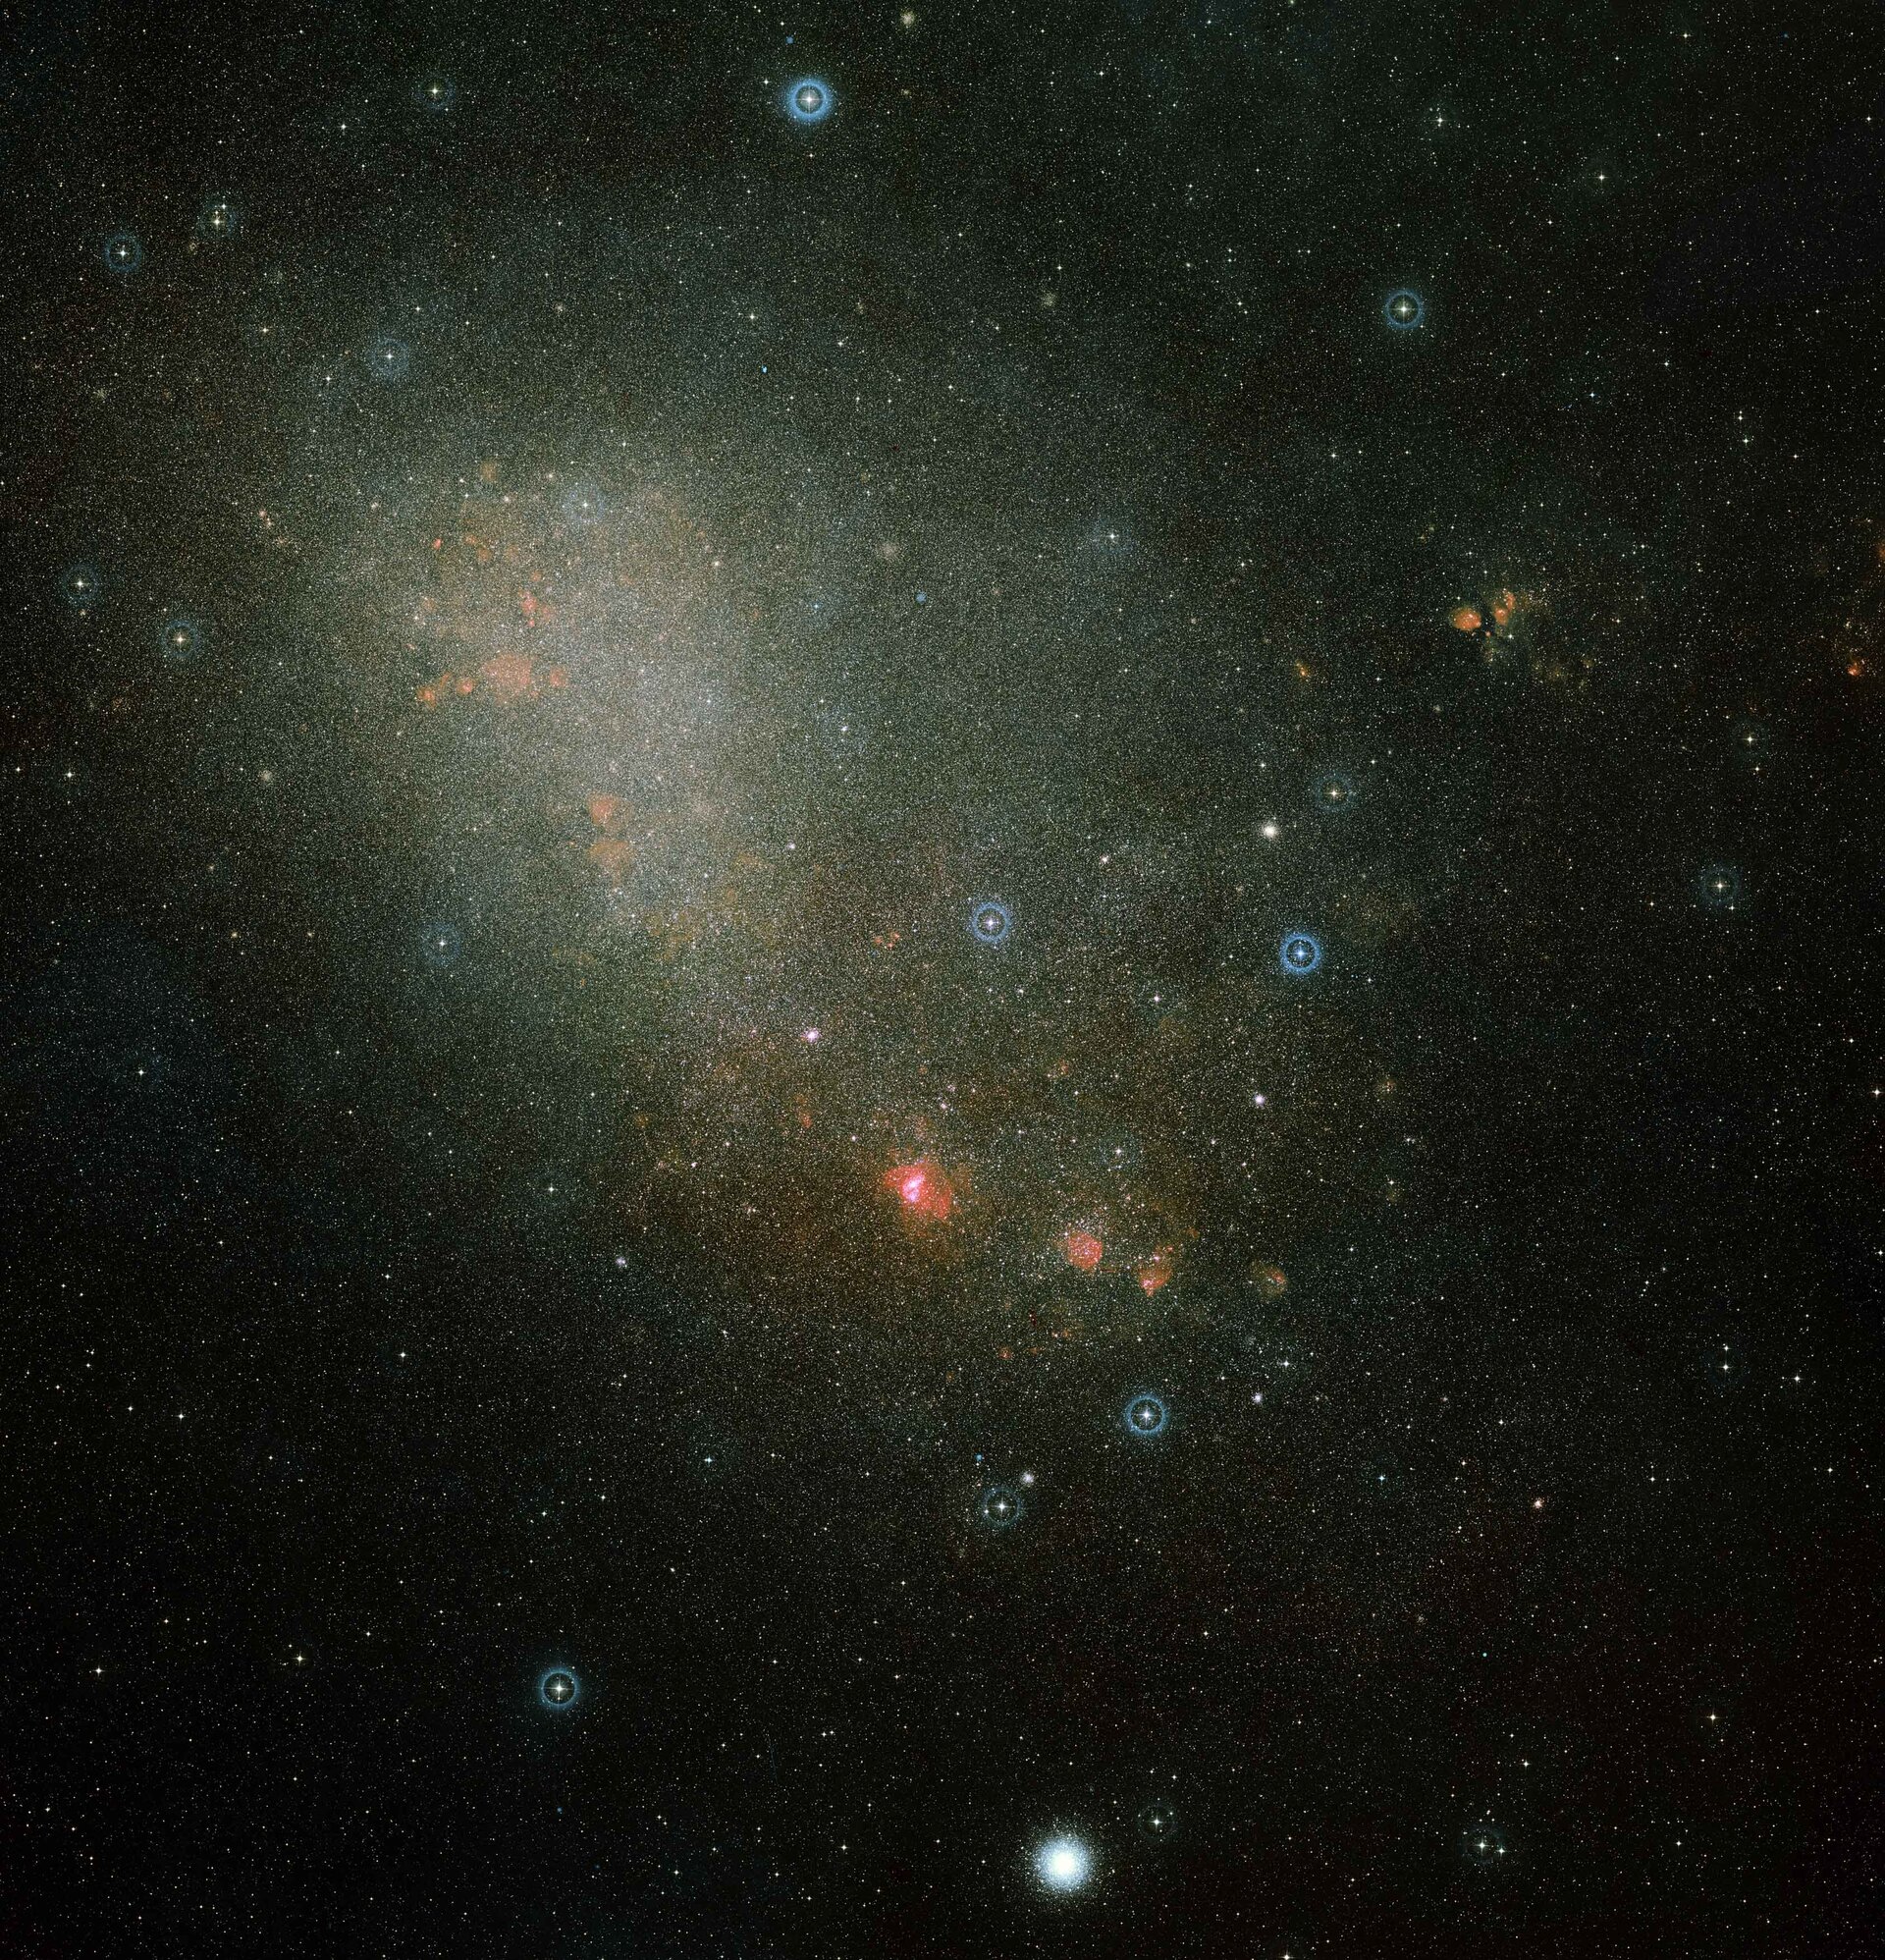 Small Magellanic Cloud, HD 5980’s host galaxy